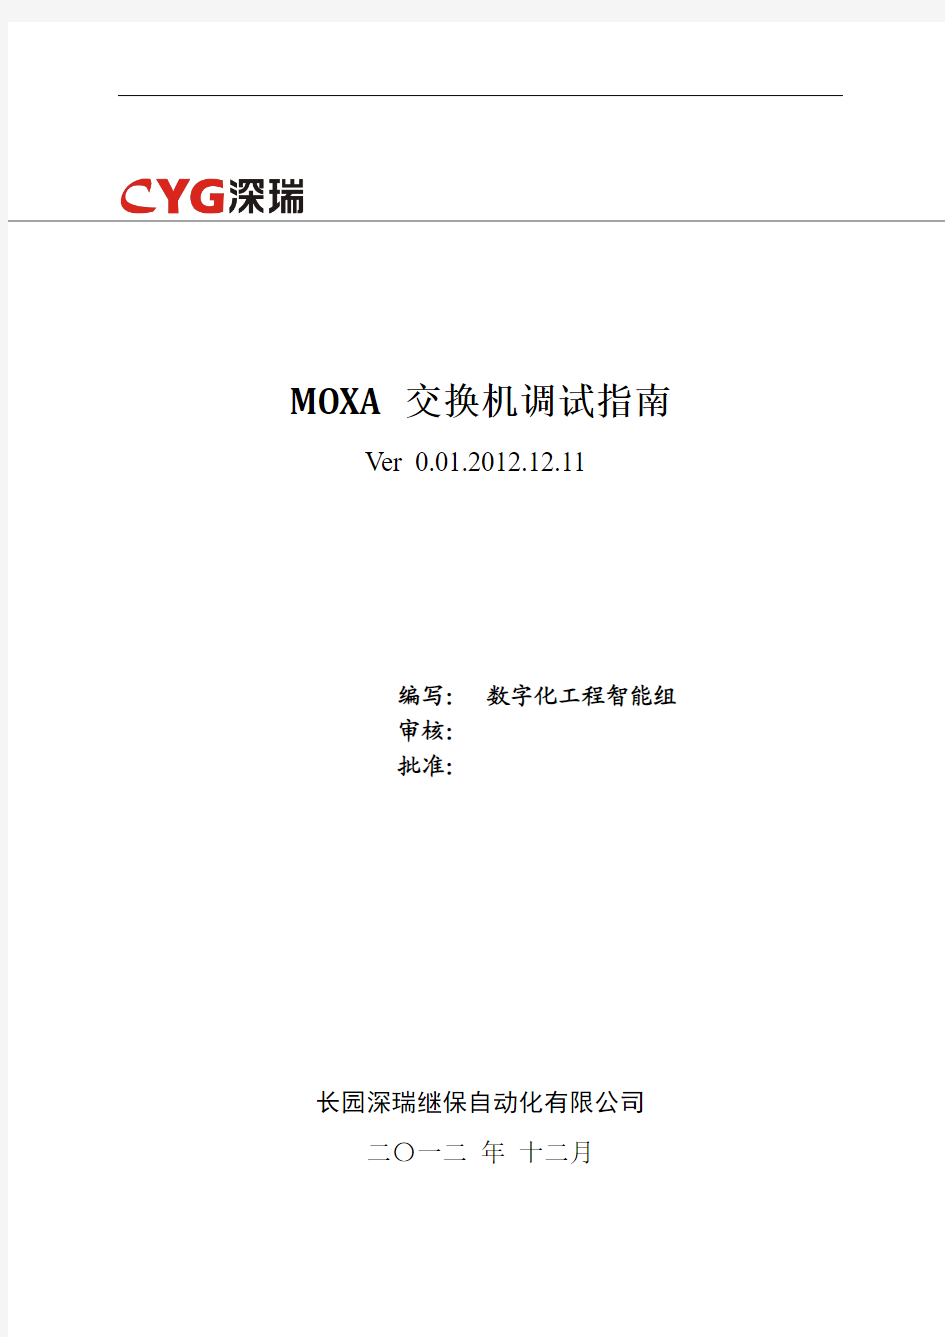 MOXA交换机调试指南-V0.01